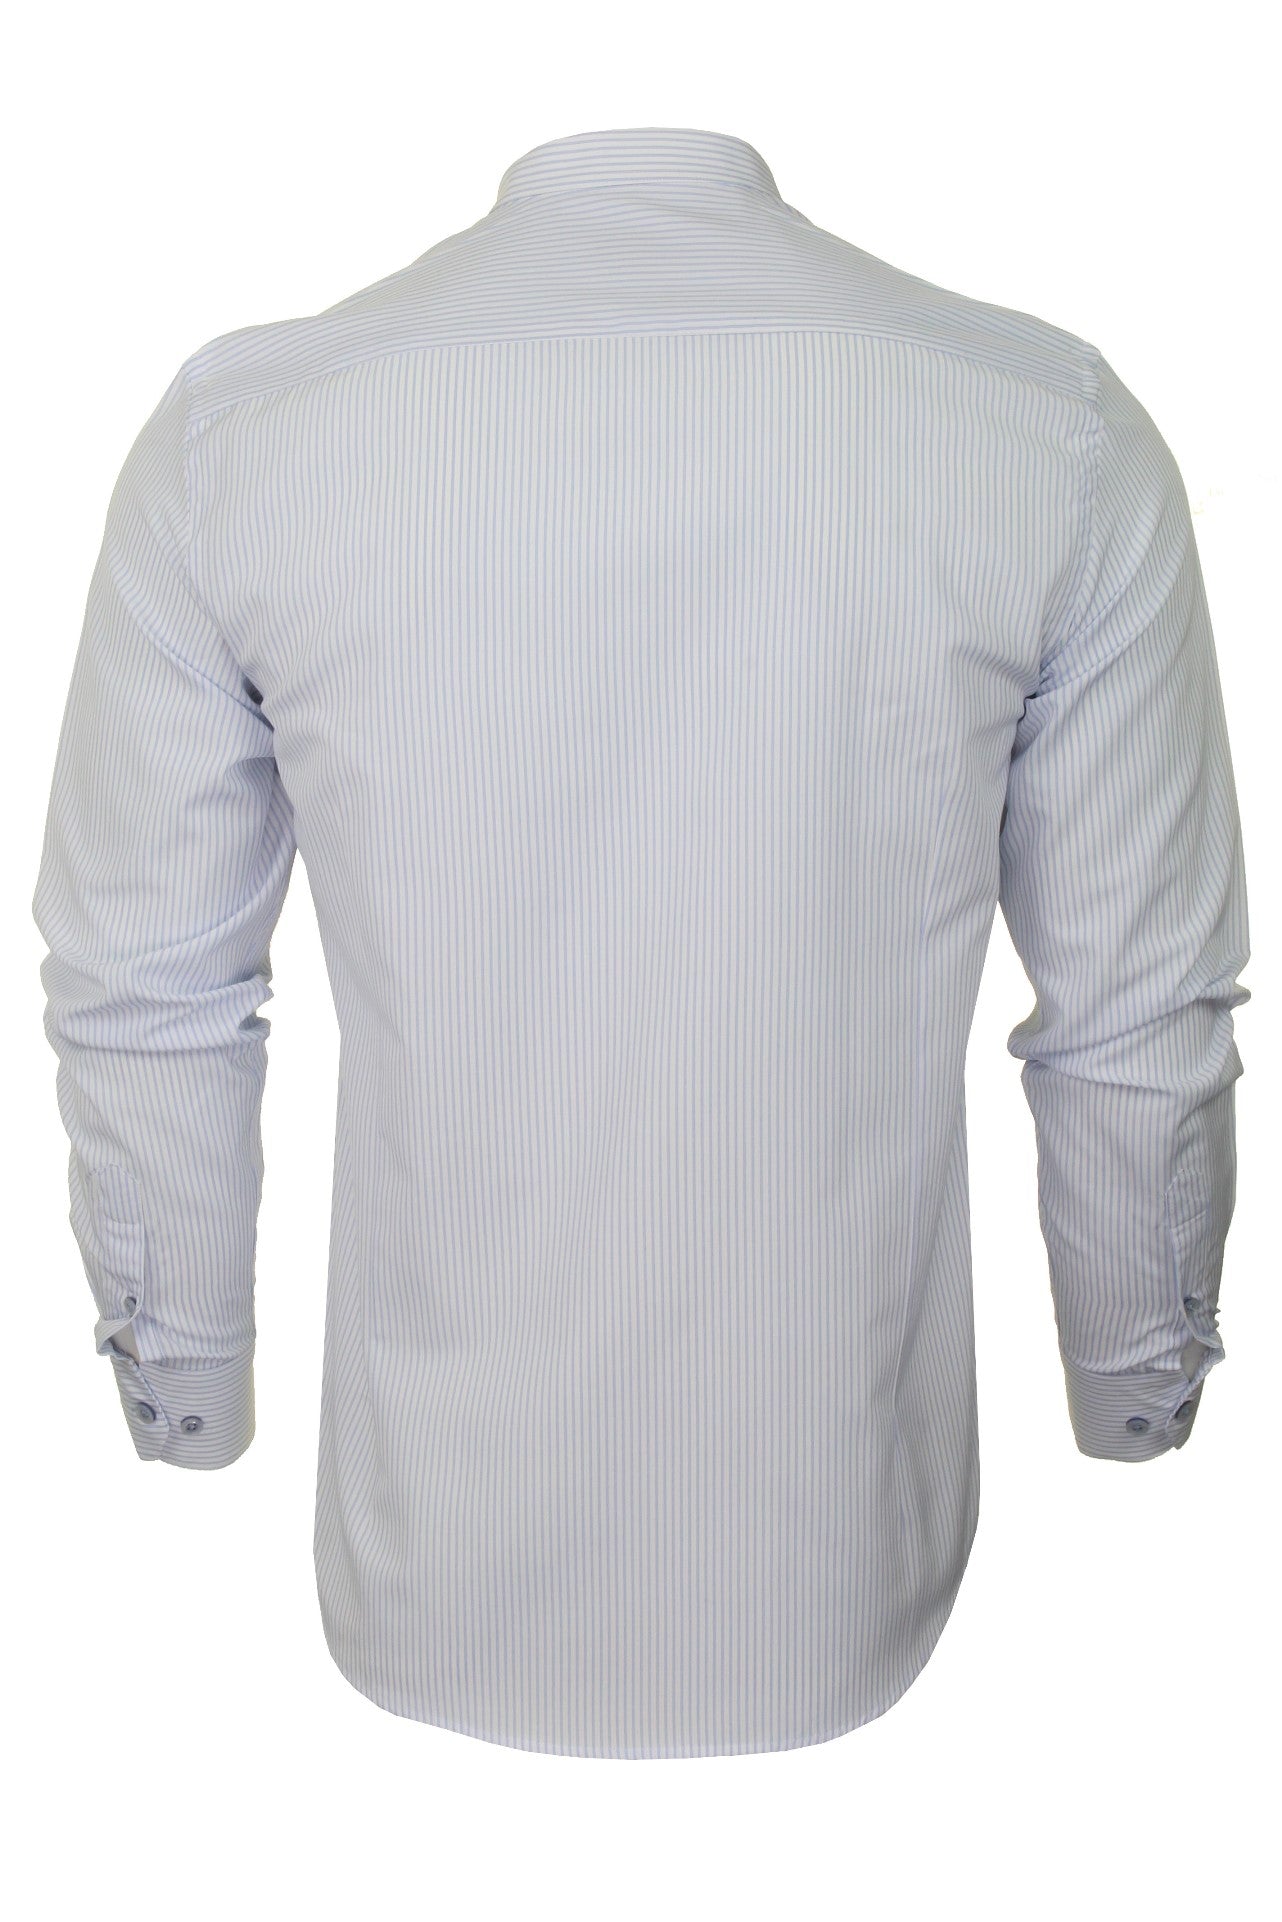 Xact Mens Stripe Grandad Shirt - Long Sleeved-3